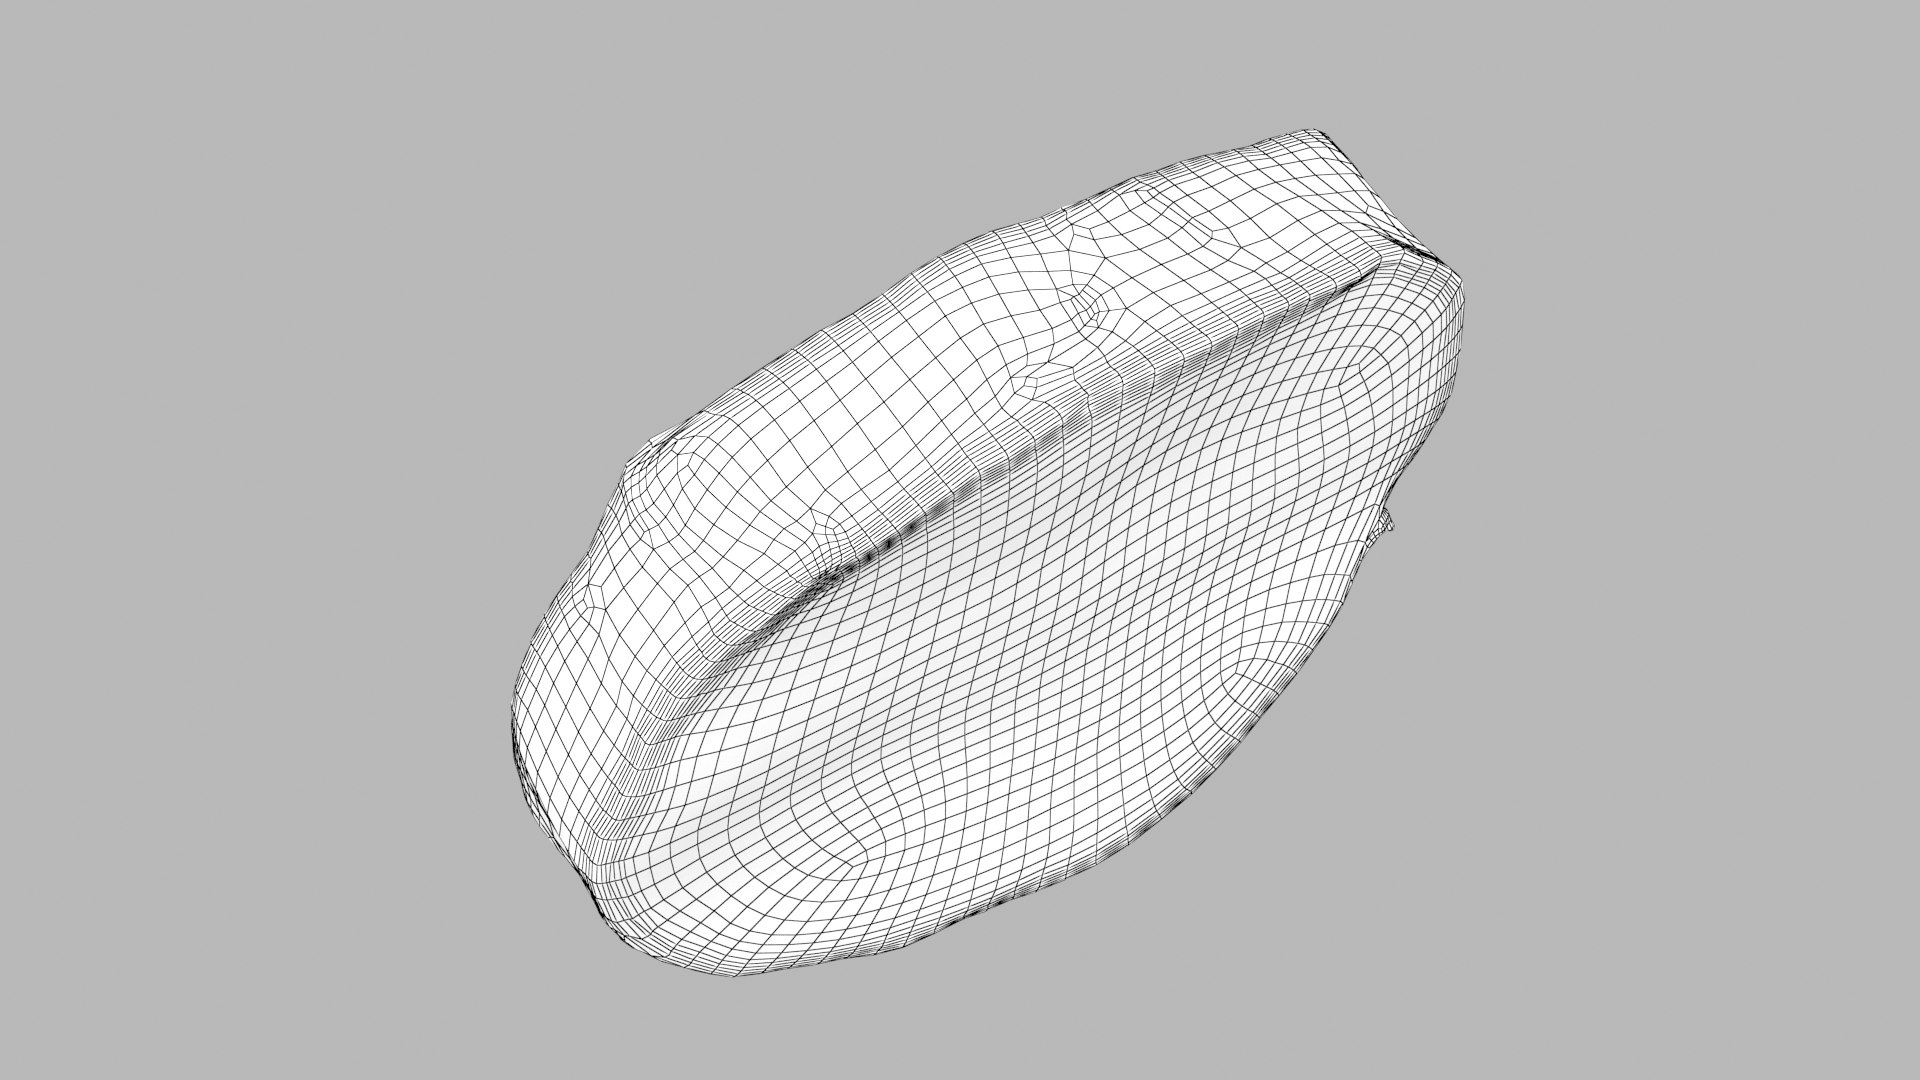 Slice Pbr 3D Model - TurboSquid 1635068